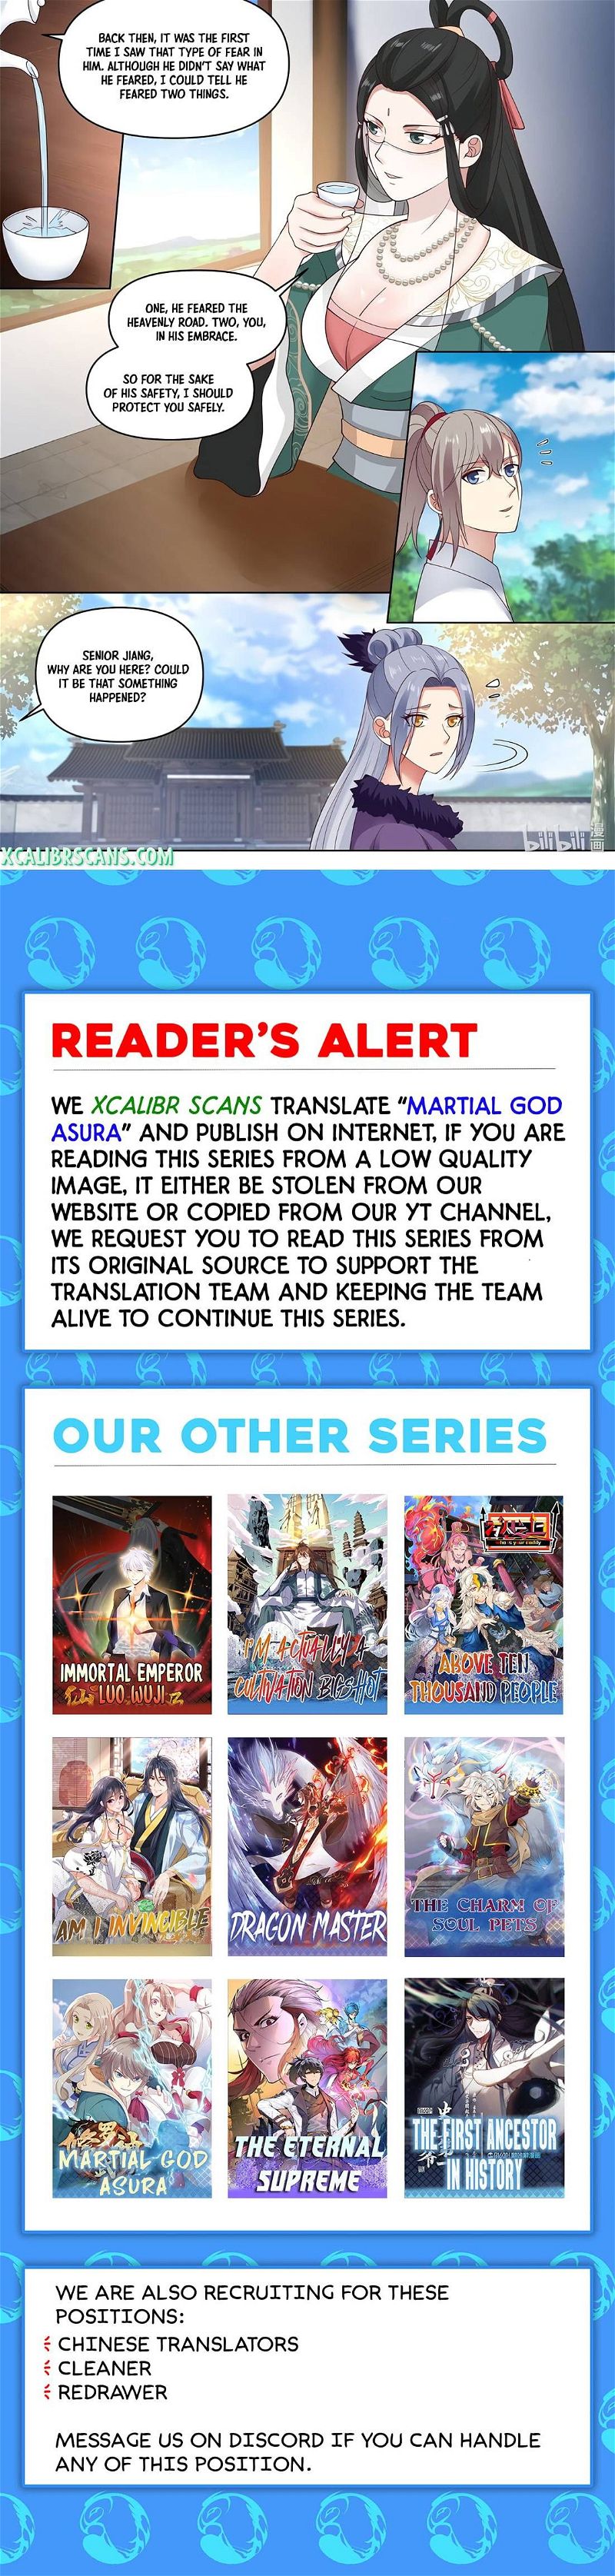 Martial God Asura Chapter 453 page 10